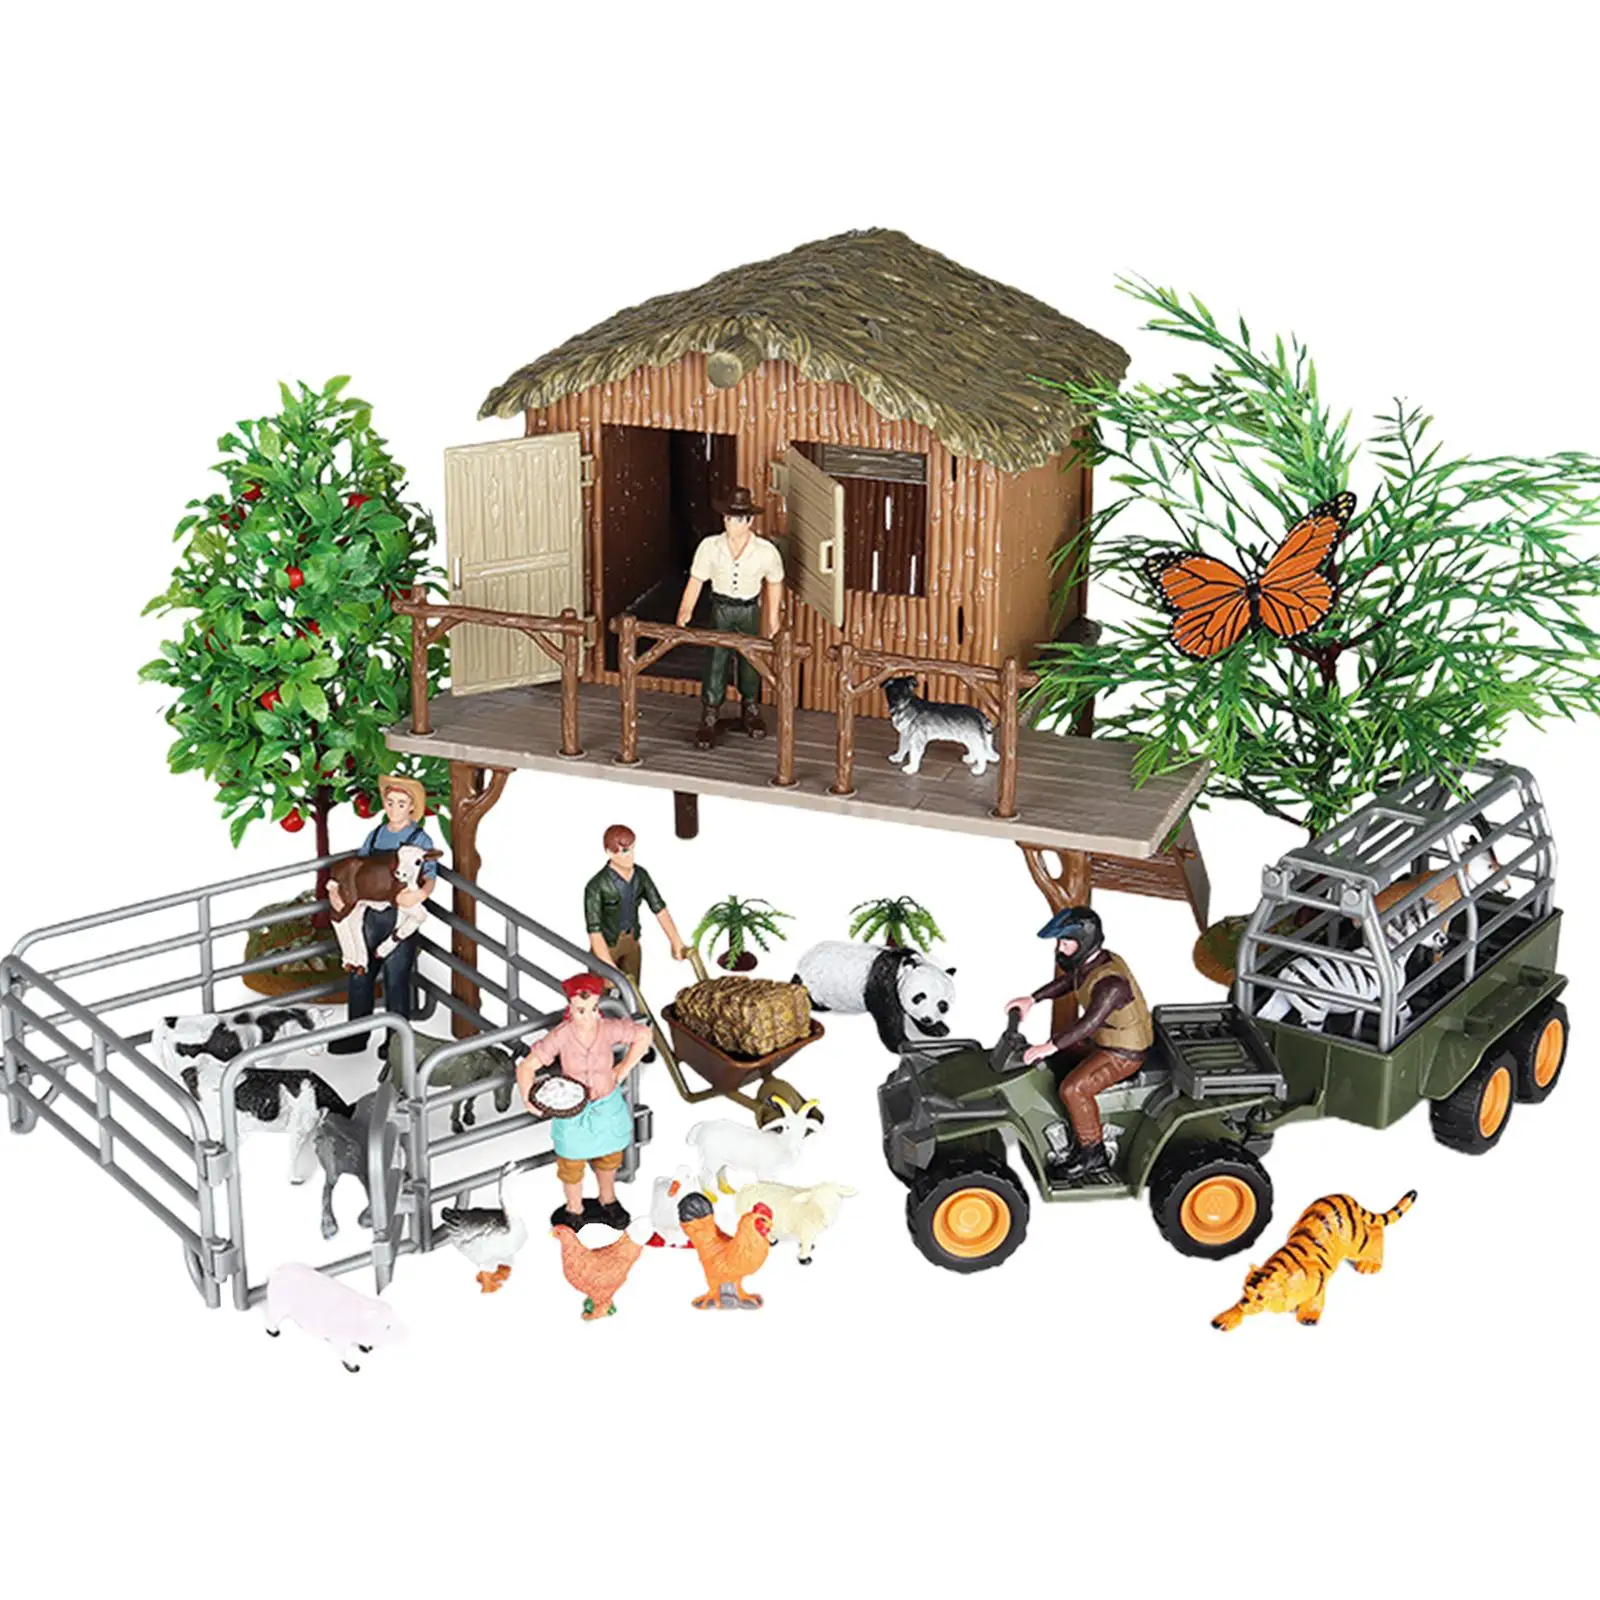 

Farm House Model Playset Figurines Action Figures for Preschool Children